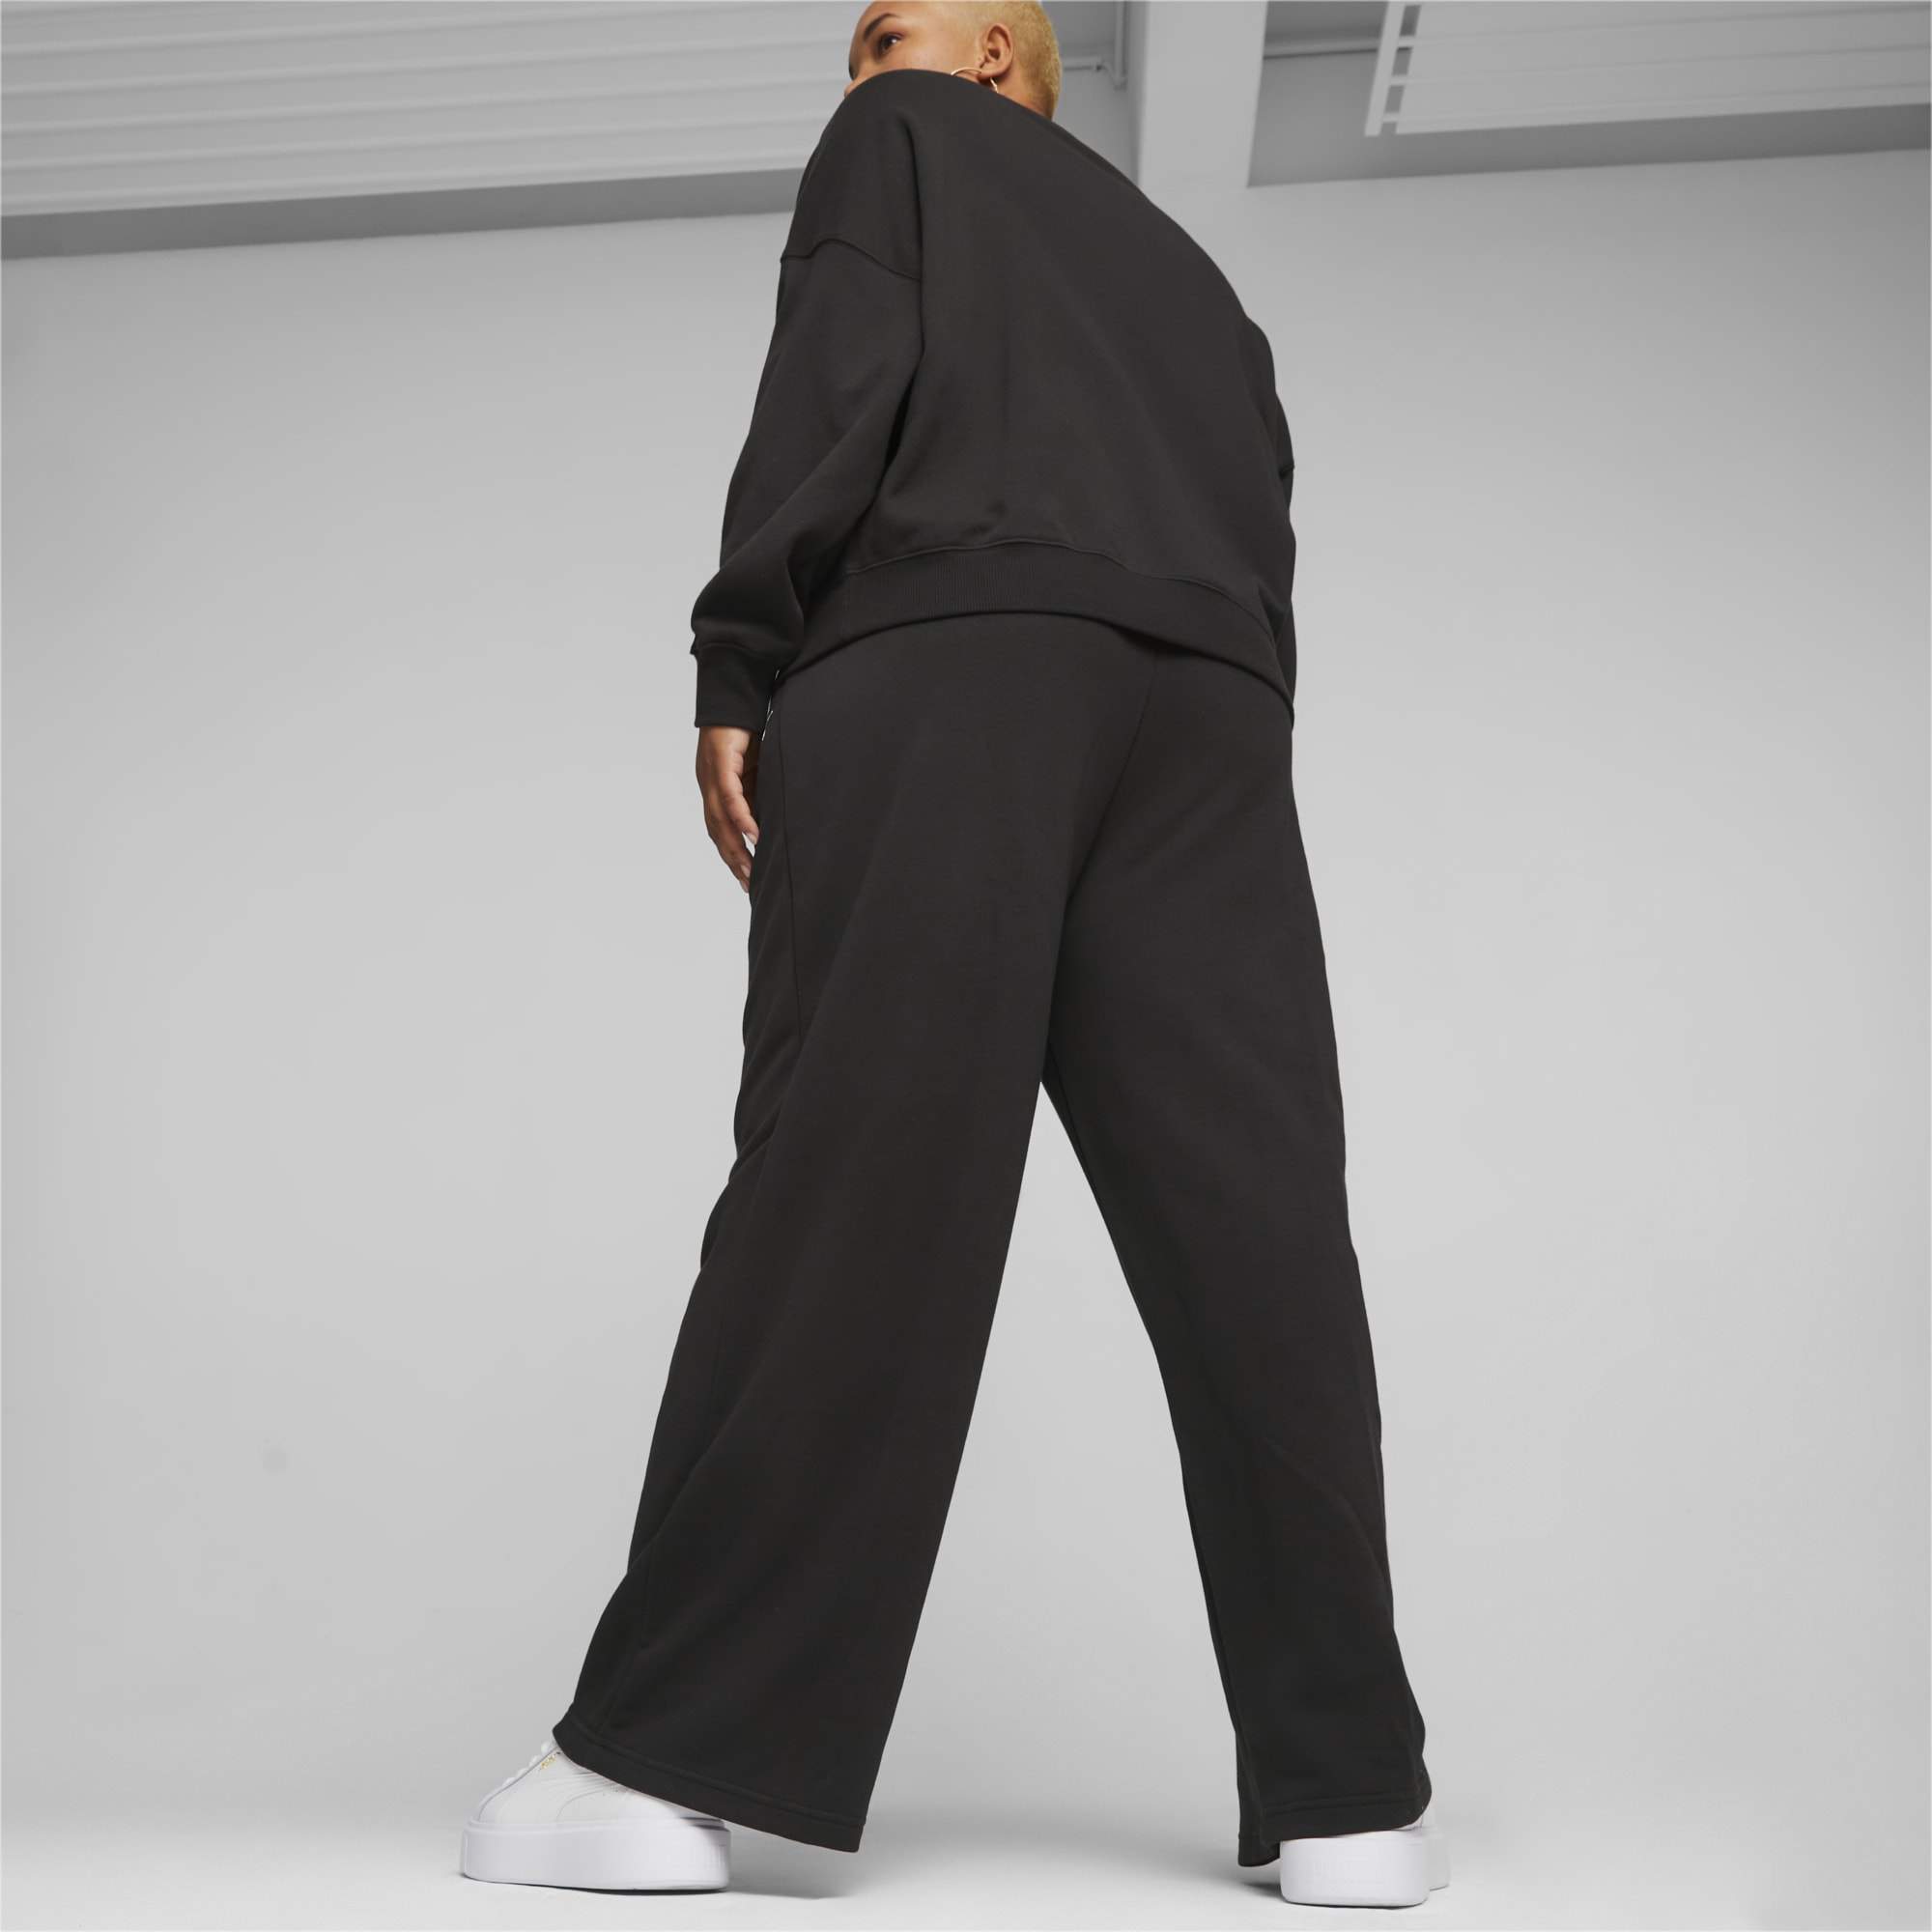 PUMA Classics Women's Relaxed Sweatpants, Black, Size XXS, Clothing